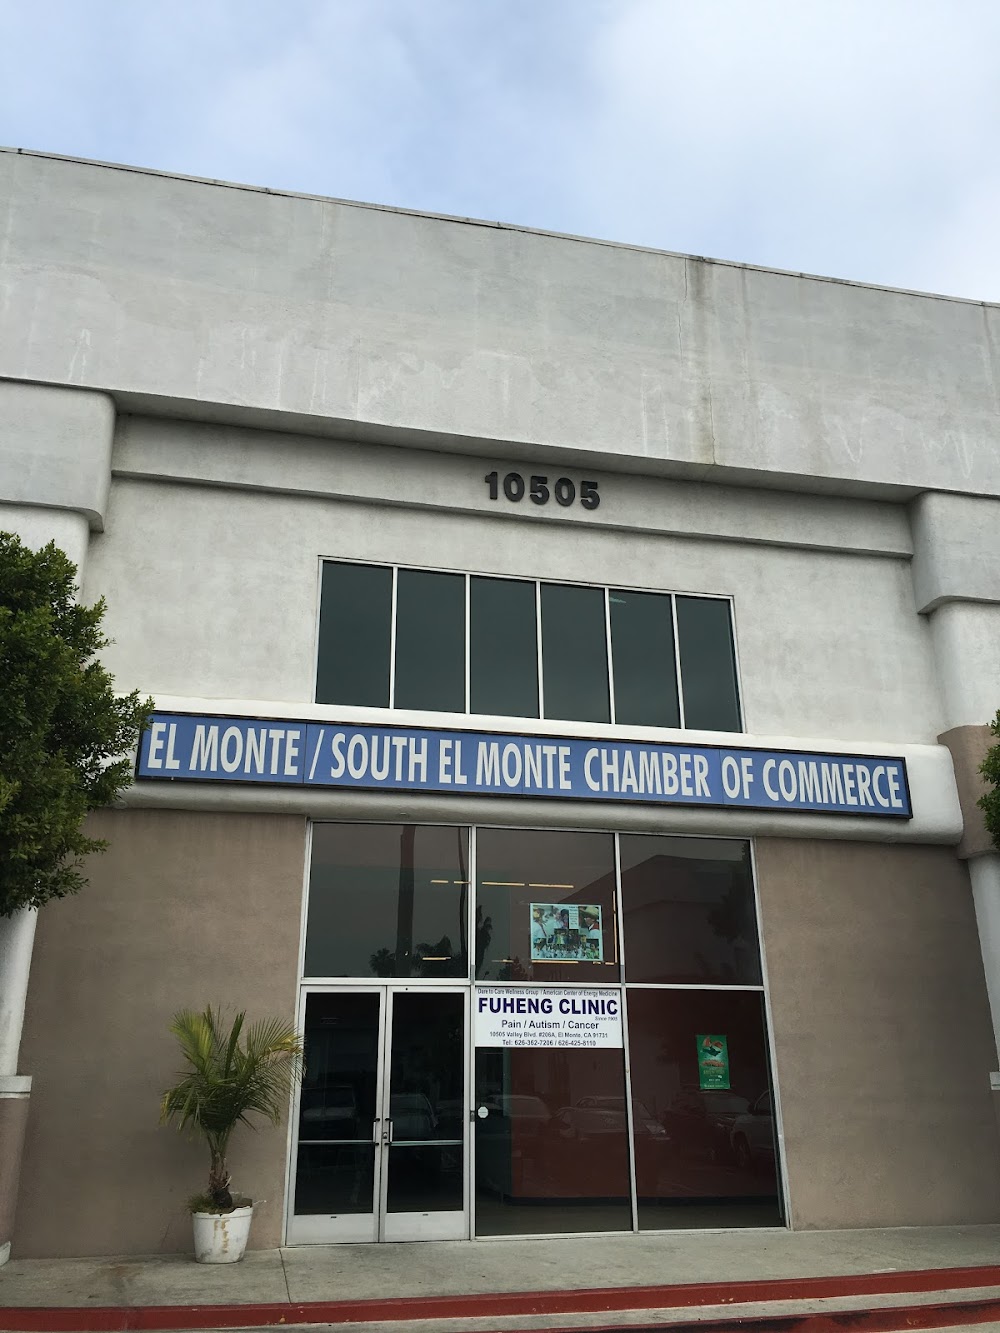 El Monte Chamber of Commerce